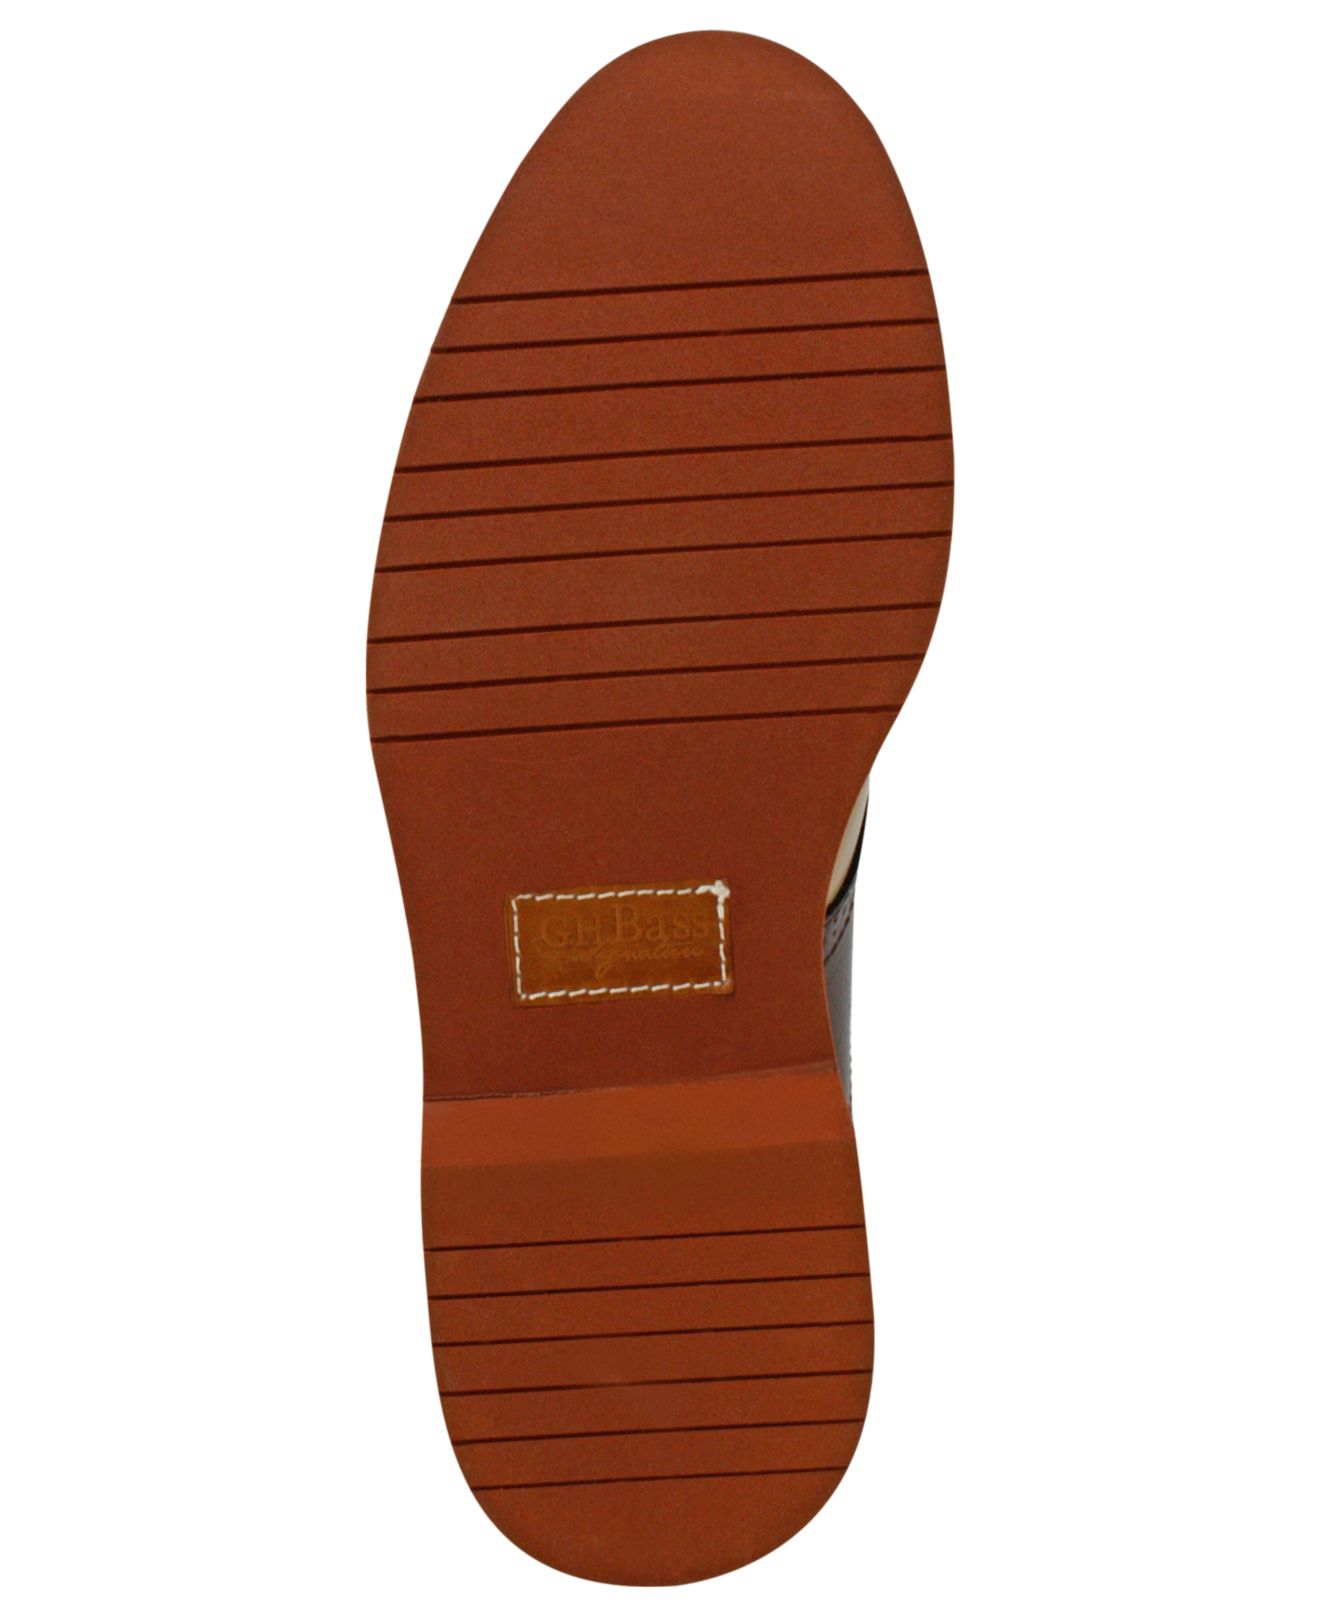 G.H.BASS Bass Burlington Plain-toe Saddle Shoes in Natural for Men - Lyst